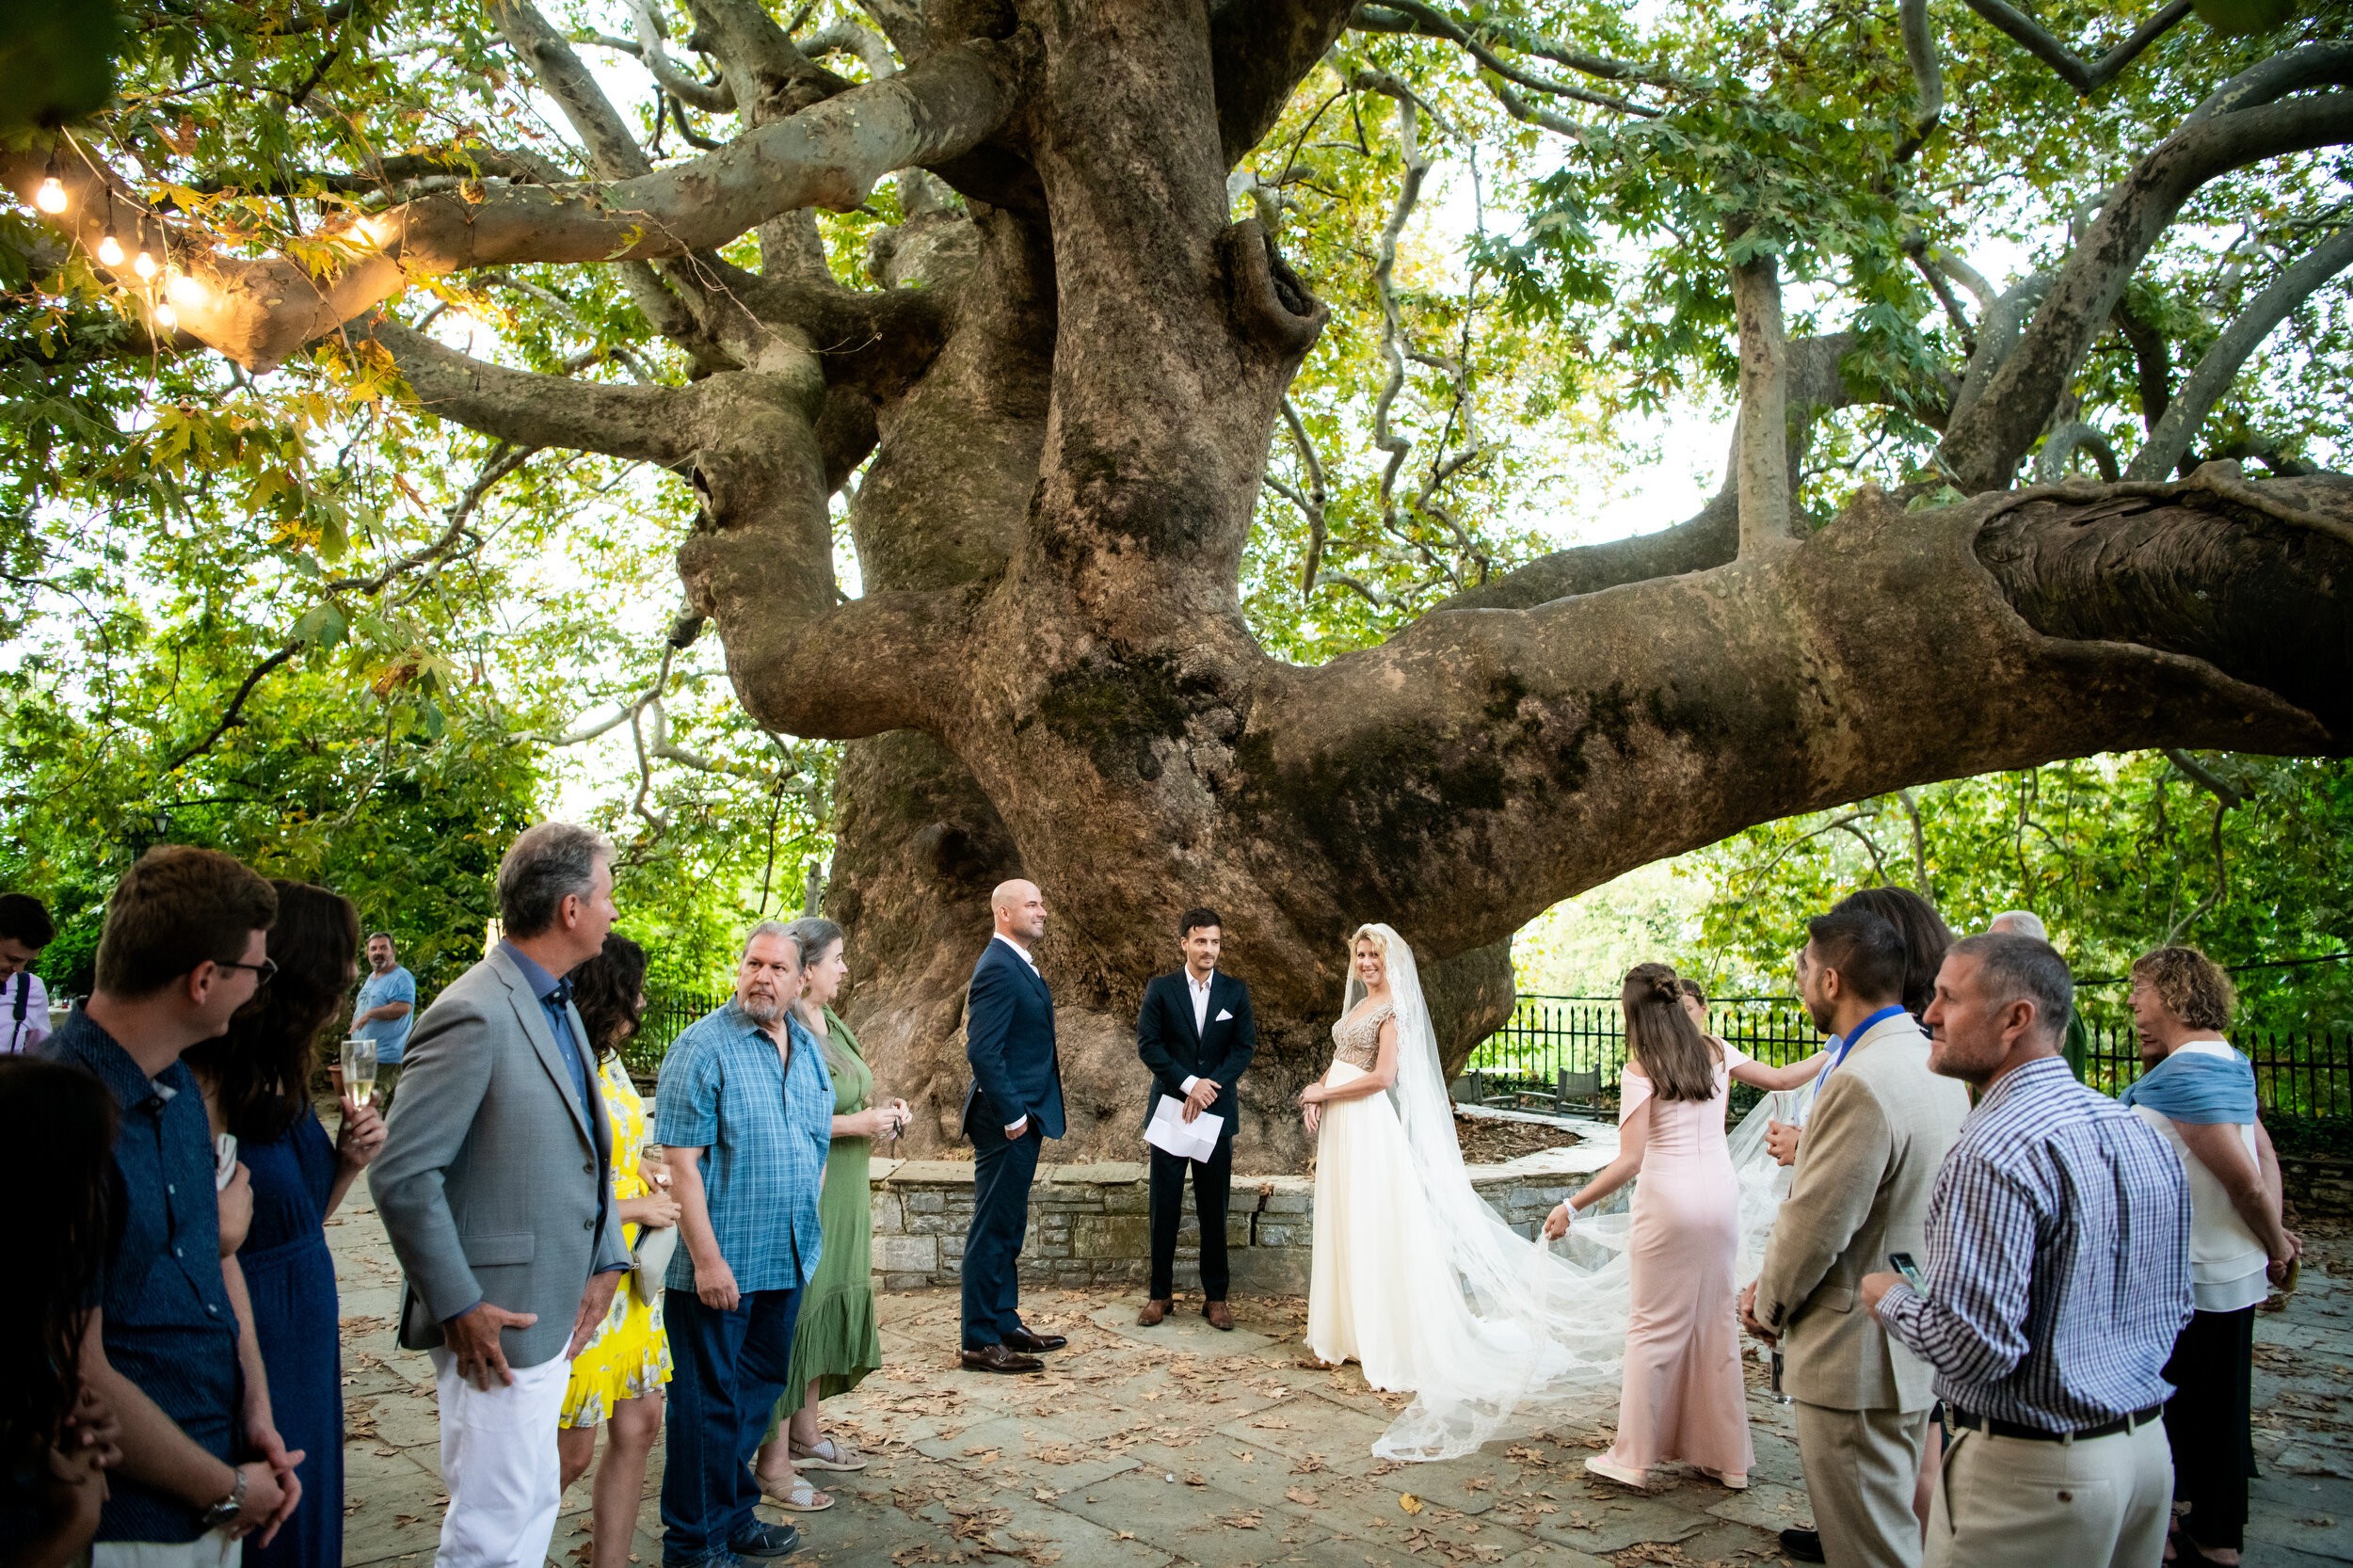 Wedding ceremony under a plane tree in Greece:  destination wedding photo at the Lost Unicorn Hotel, Tsagarada, Greece by J. Brown Photography.